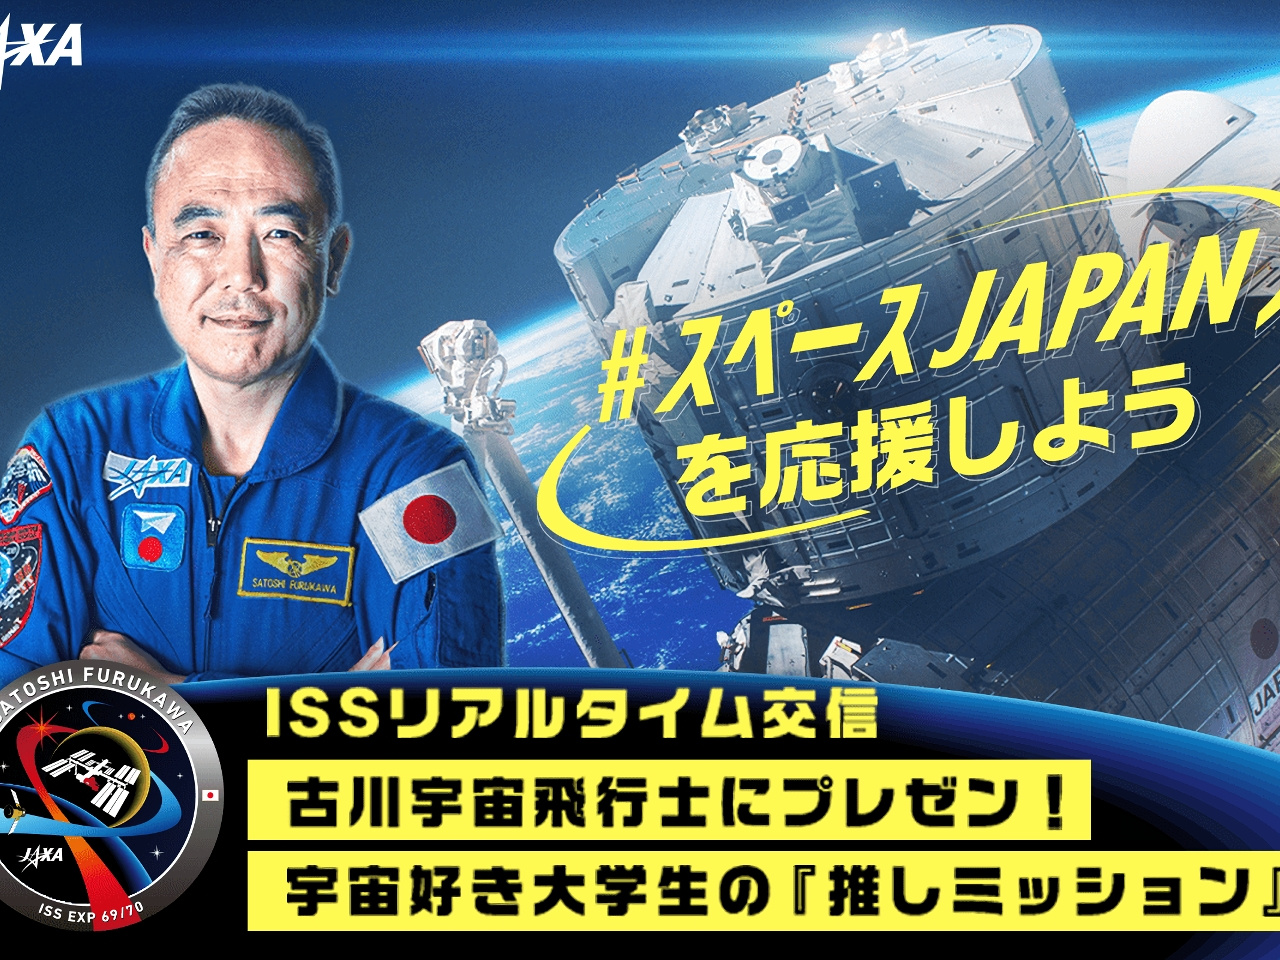 ISS滞在中の古川聡飛行士に「推しミッション」をプレゼン--大学生の参加者募集